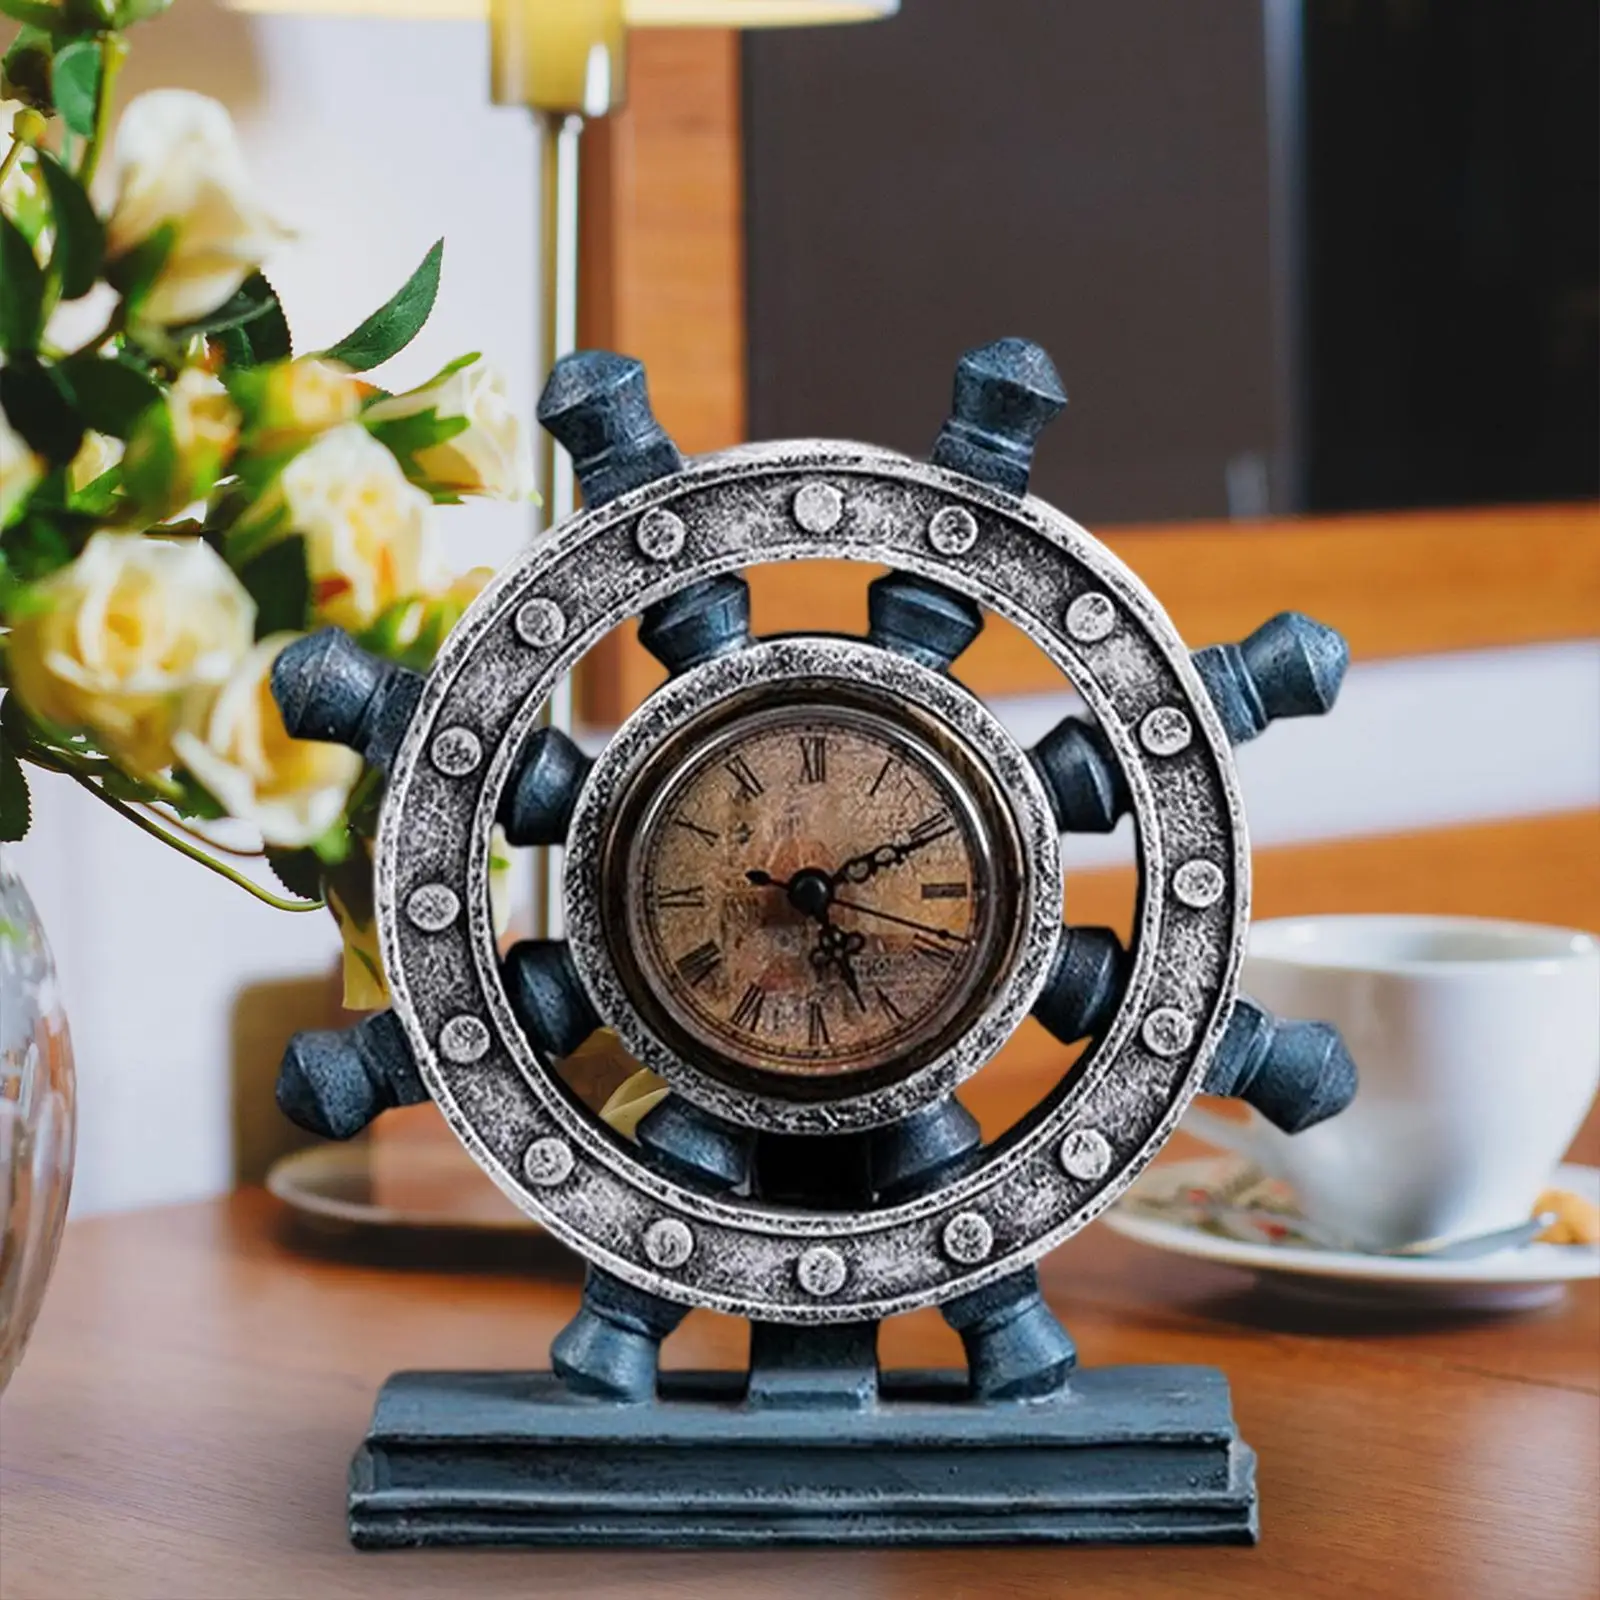 Vintage Style Desk Clock Ship Wheel Silent Rudder Beach Sea Theme Nautical for Mantel Laundry Bedroom Office Decor